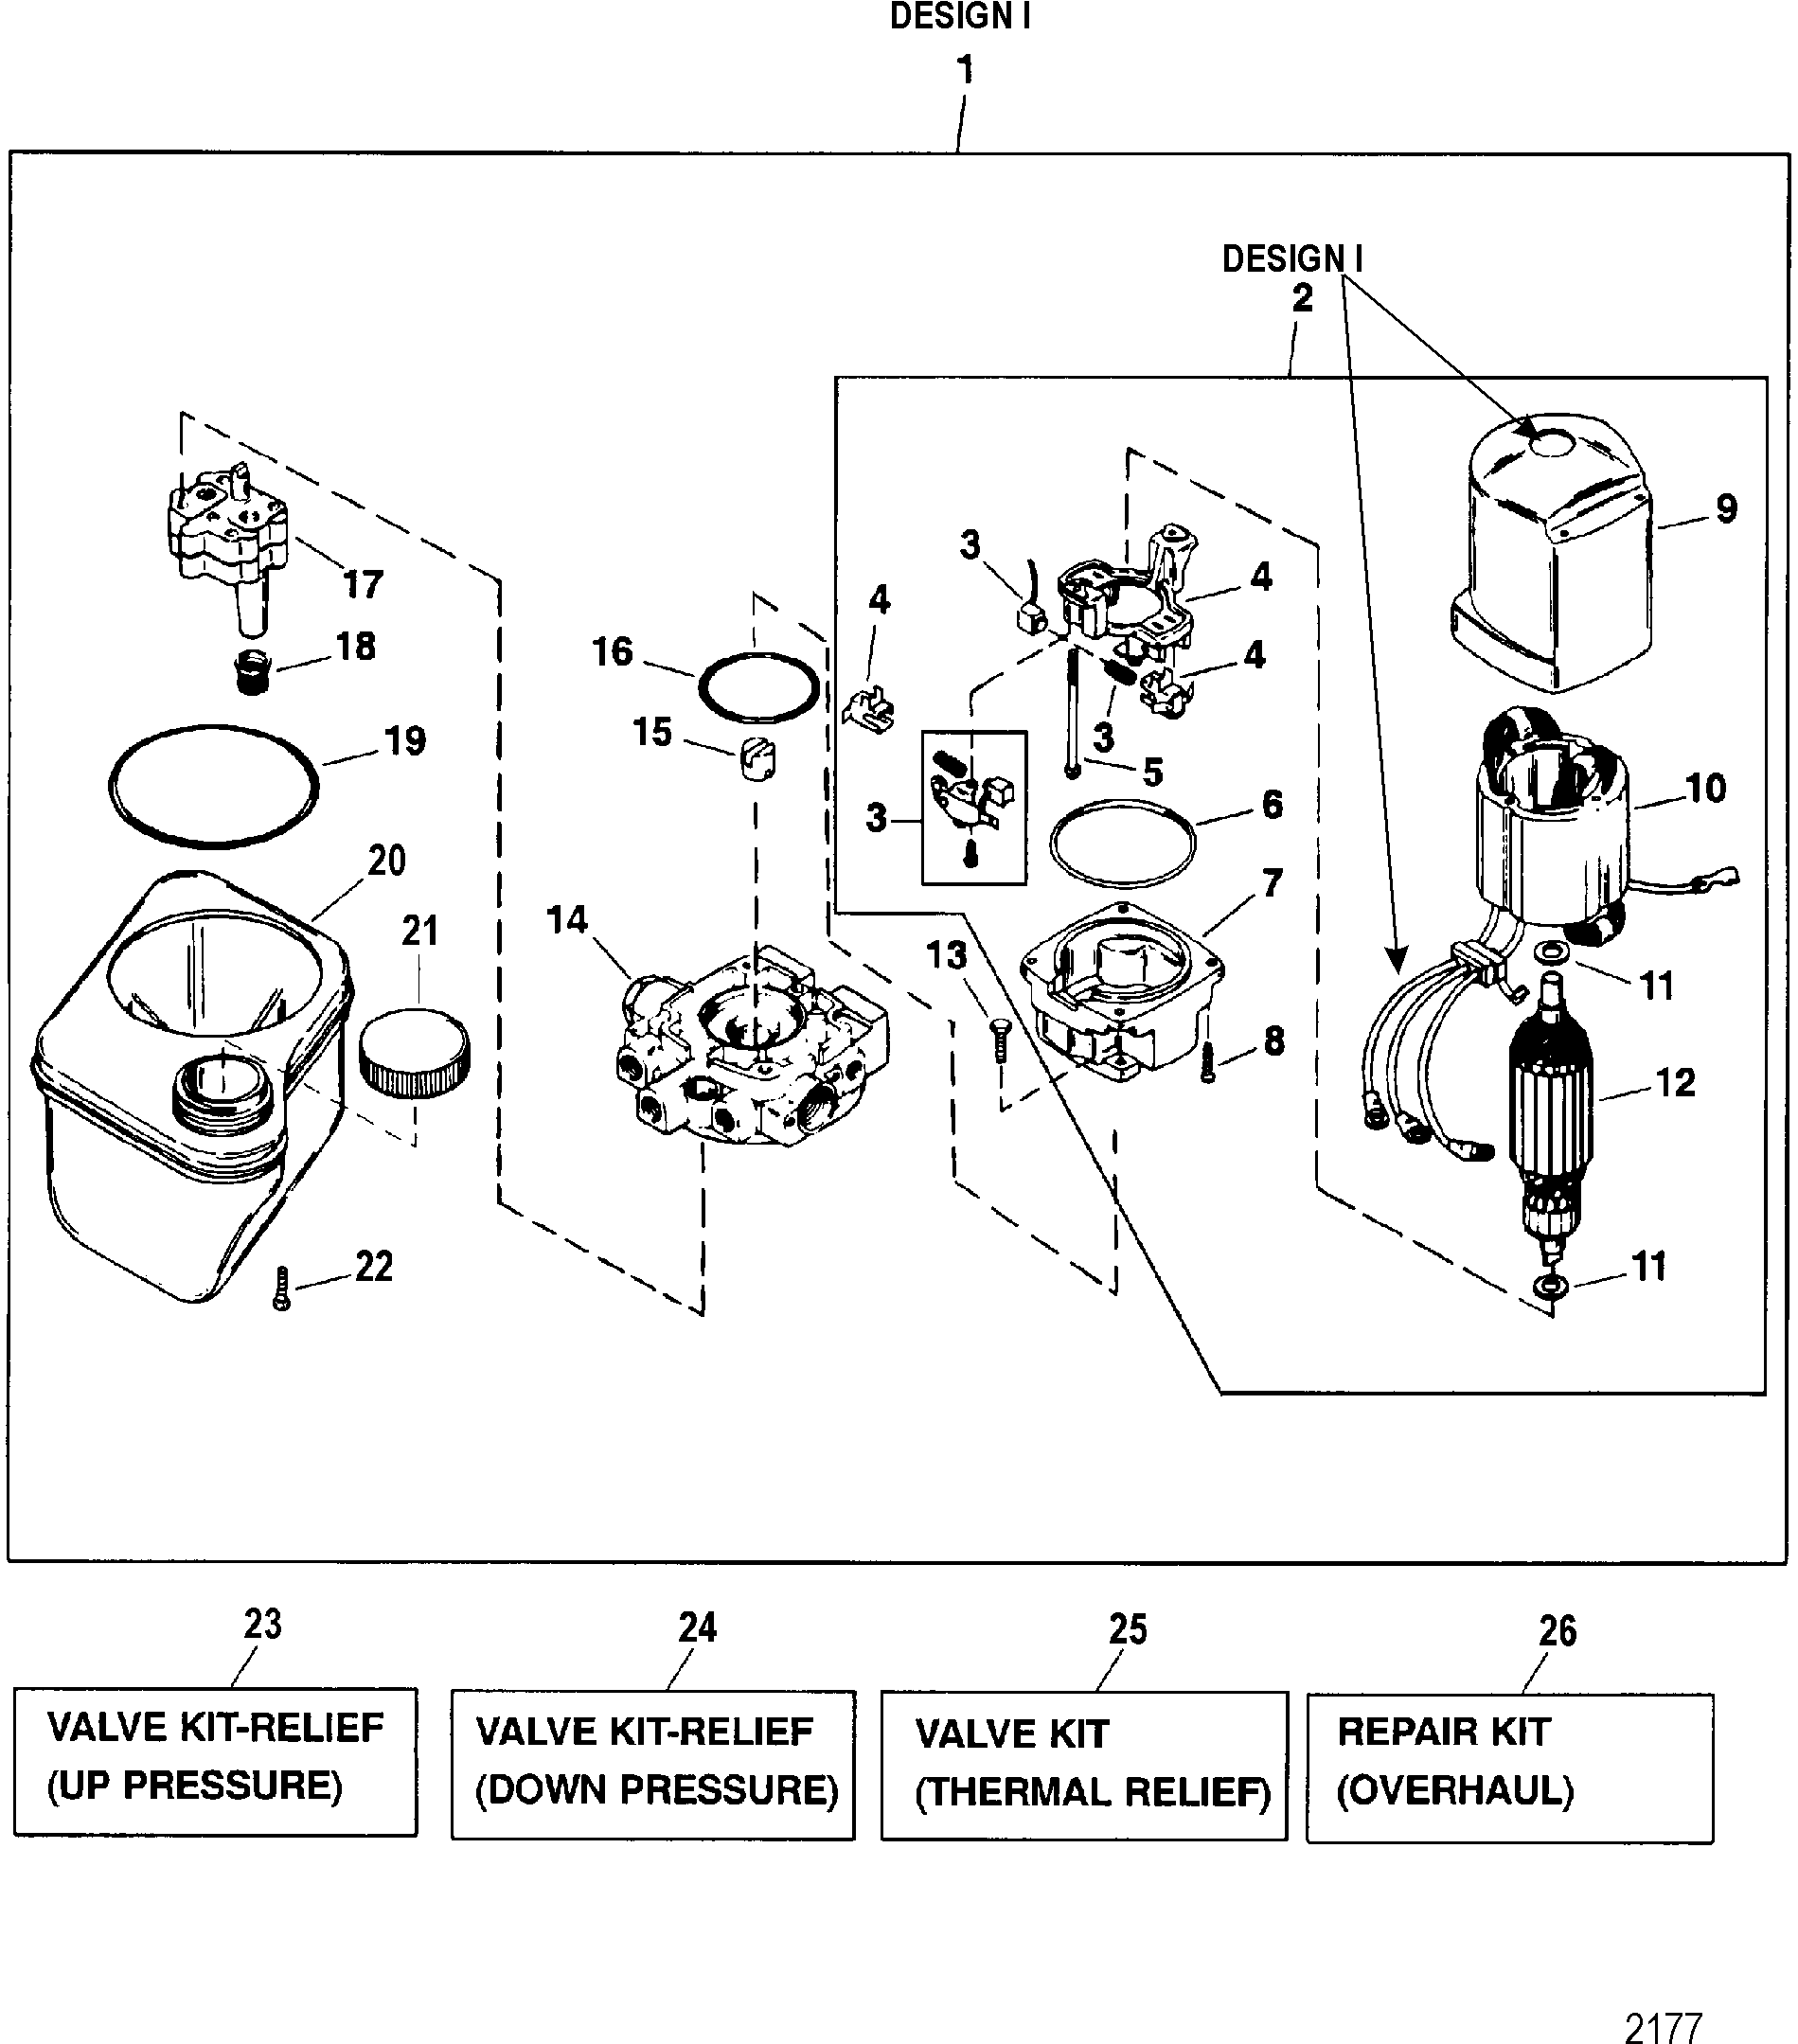 PUMP/MOTOR(BOTTOM MT RESERVOIR) (DESIGN I - 14336A8)